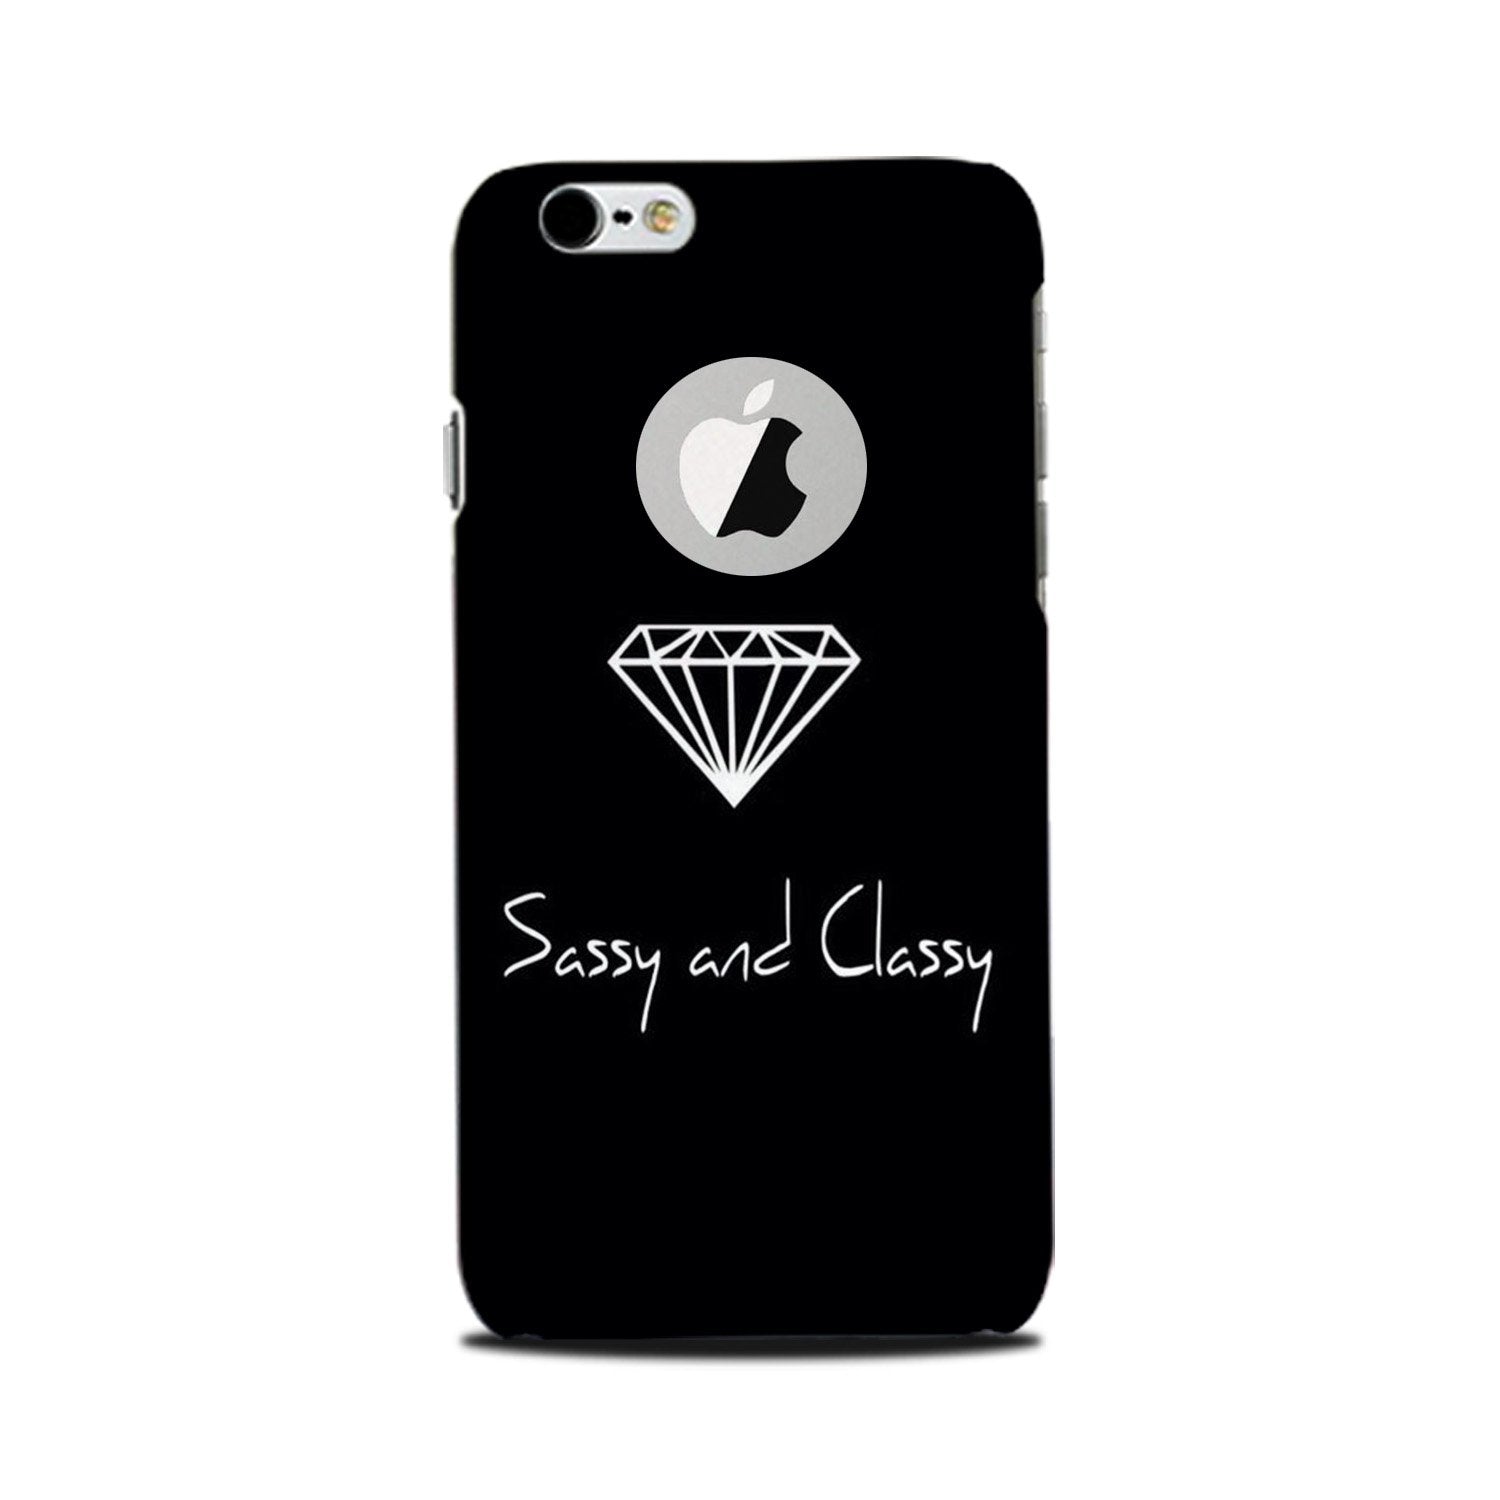 Sassy and Classy Case for iPhone 6 Plus / 6s Plus logo cut  (Design No. 264)